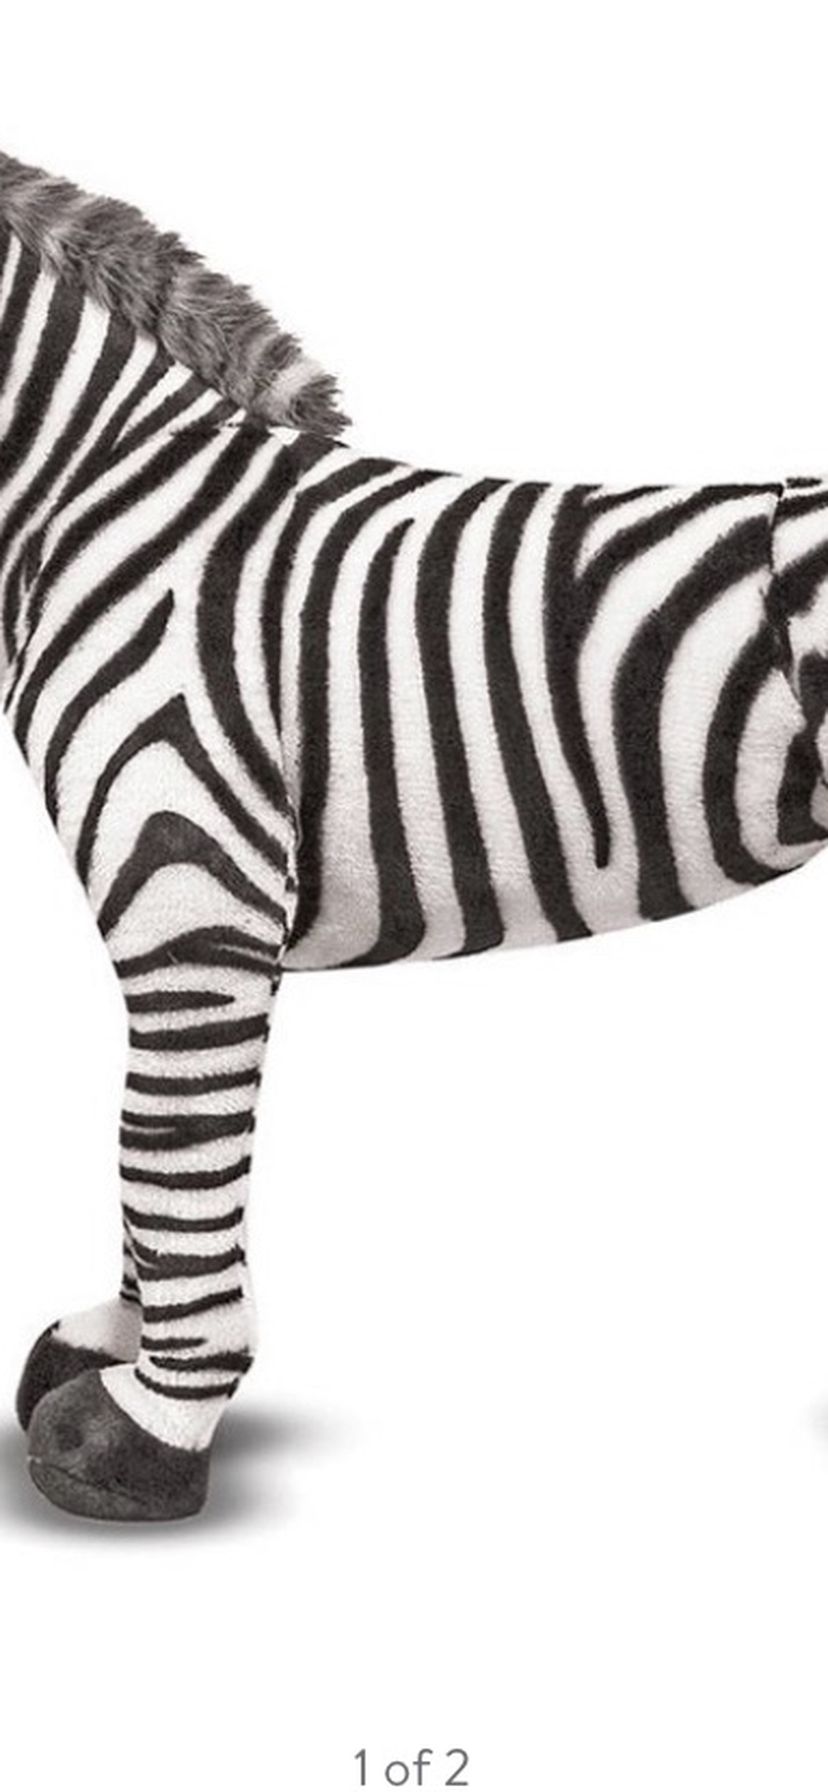 Life Size Plush Zebra